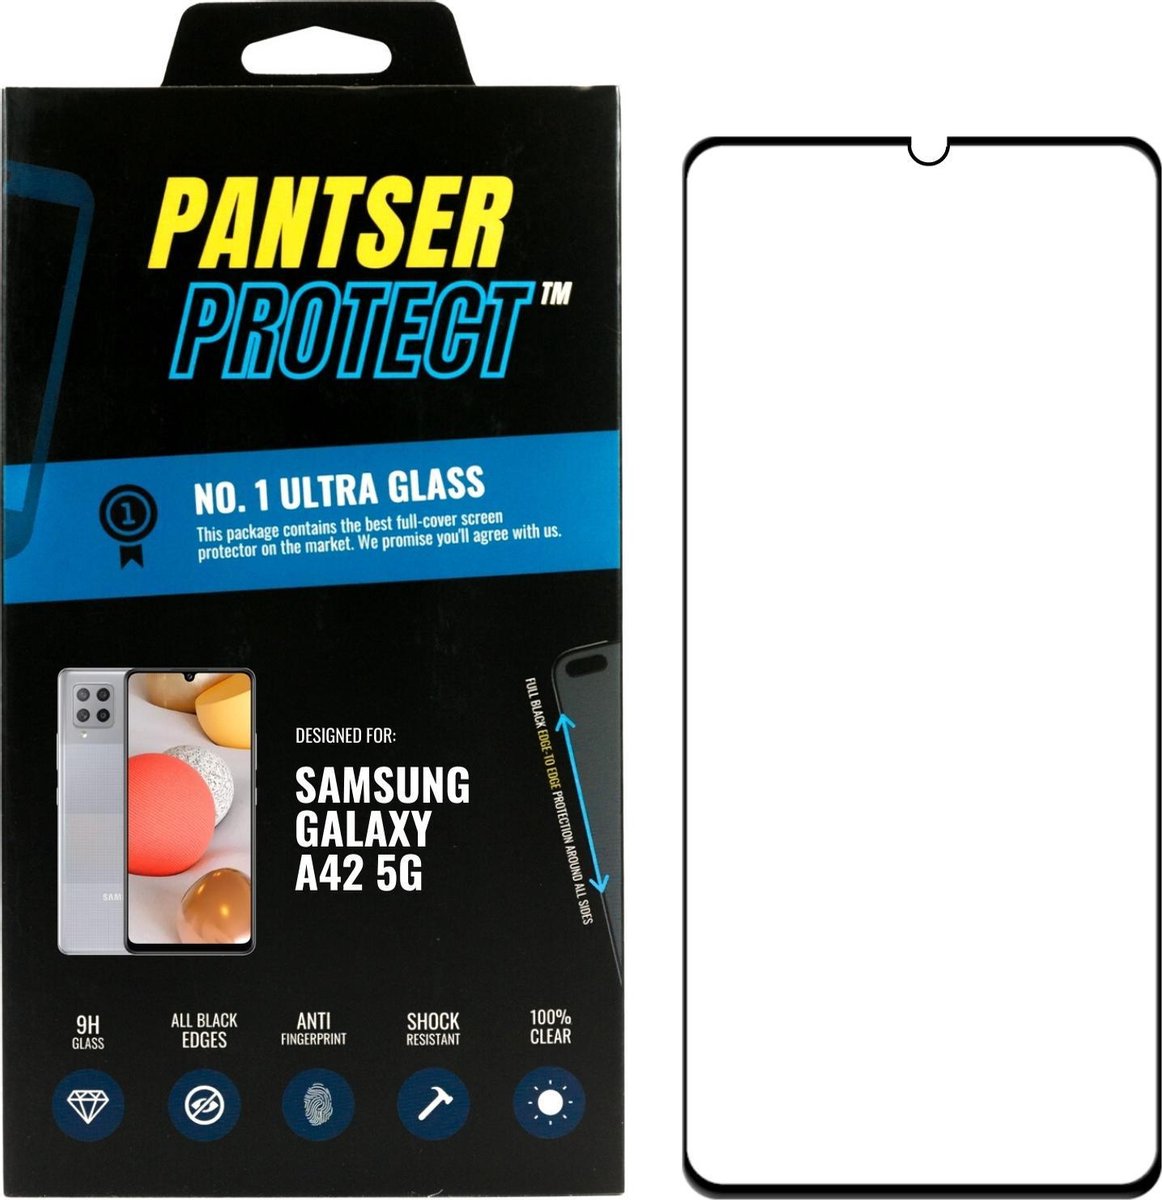 Pantser Protect ™ Case Friendly Screenprotector Geschikt voor Samsung Galaxy A42 5G - Premium glazen full-cover Pantserglas Protector - Tempered Glass Bescherm Glas